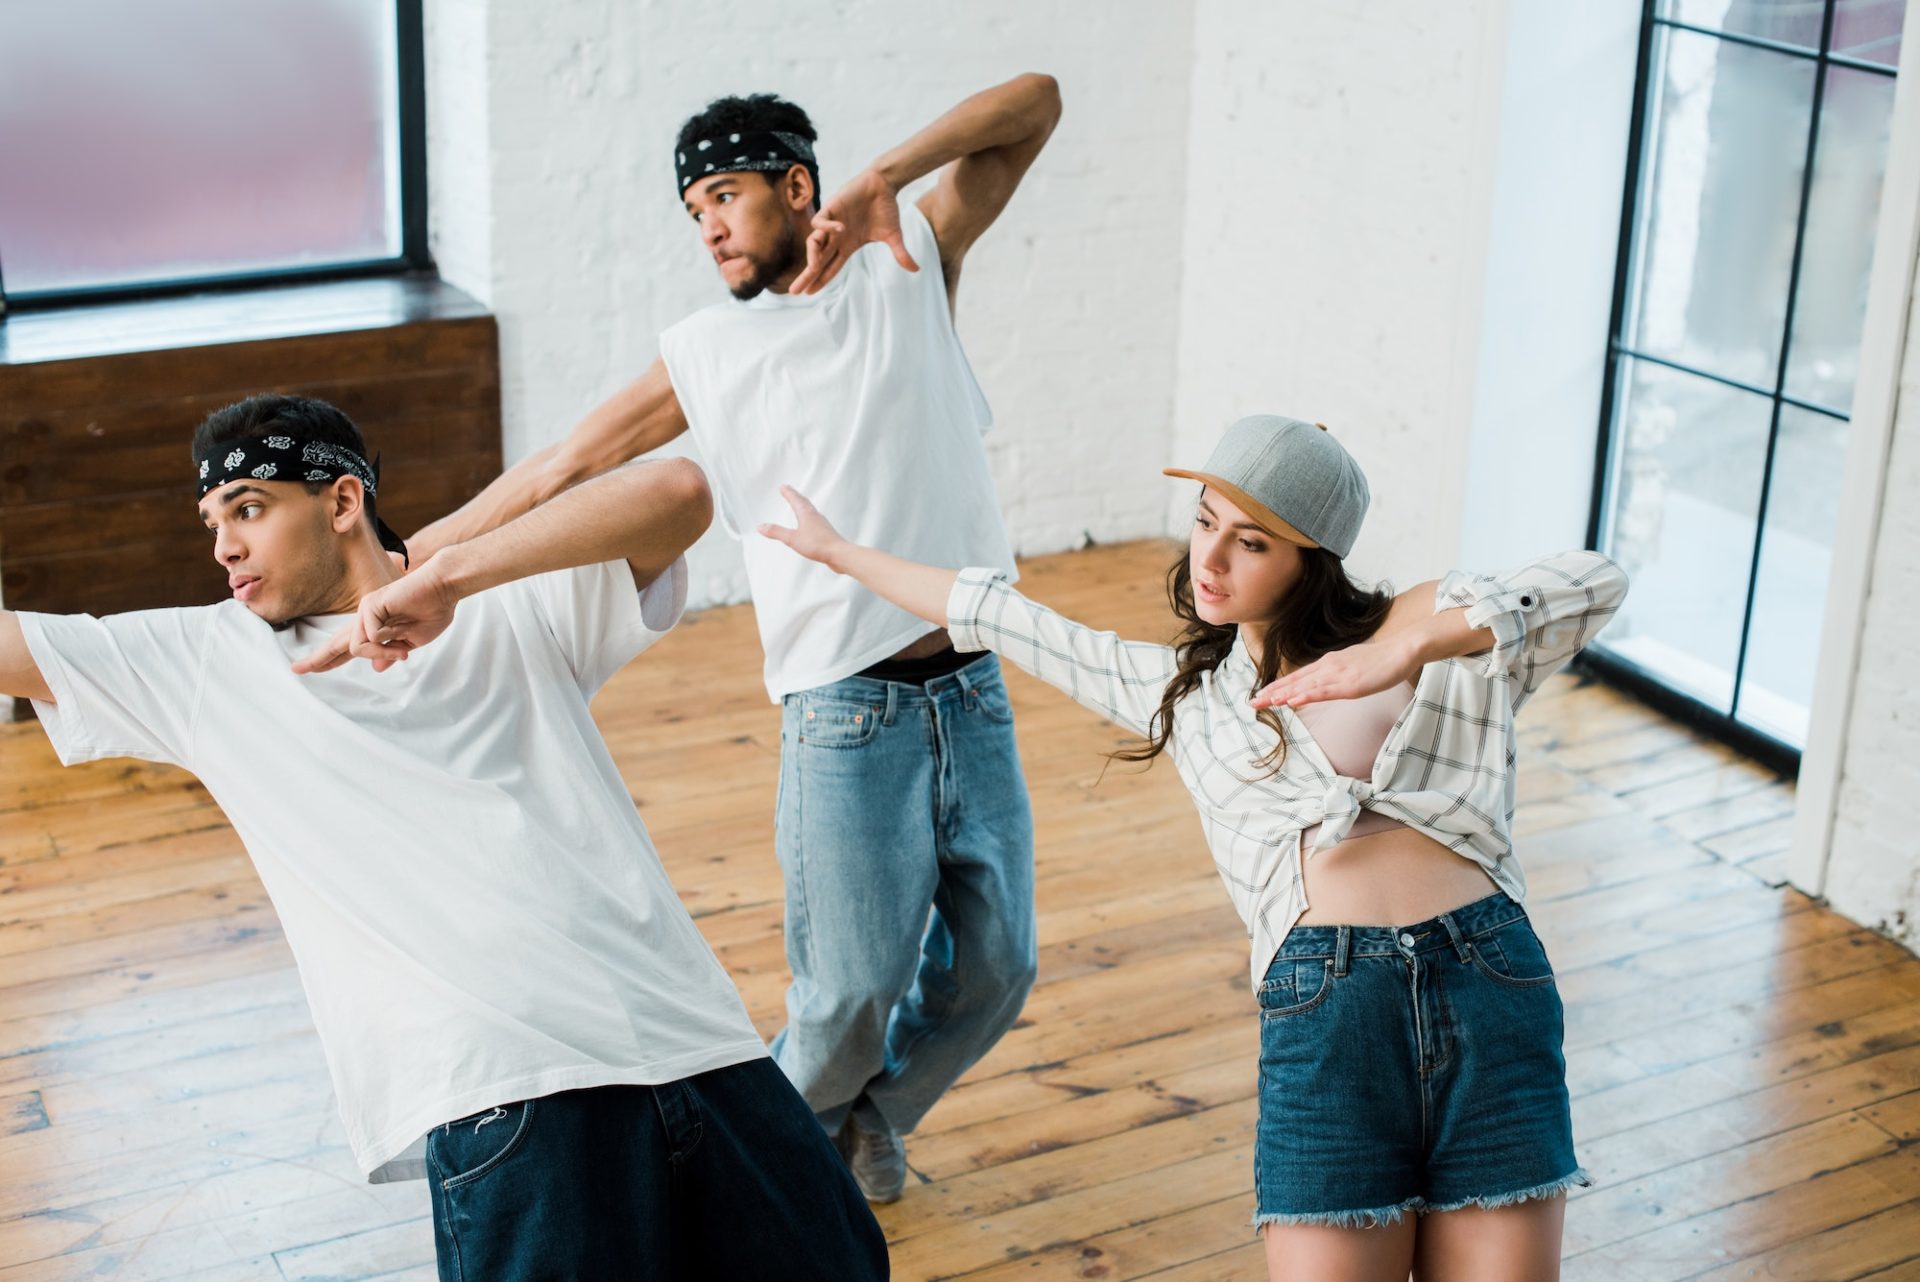 multicultural dancers gesturing while dancing hip-hop in dance studio